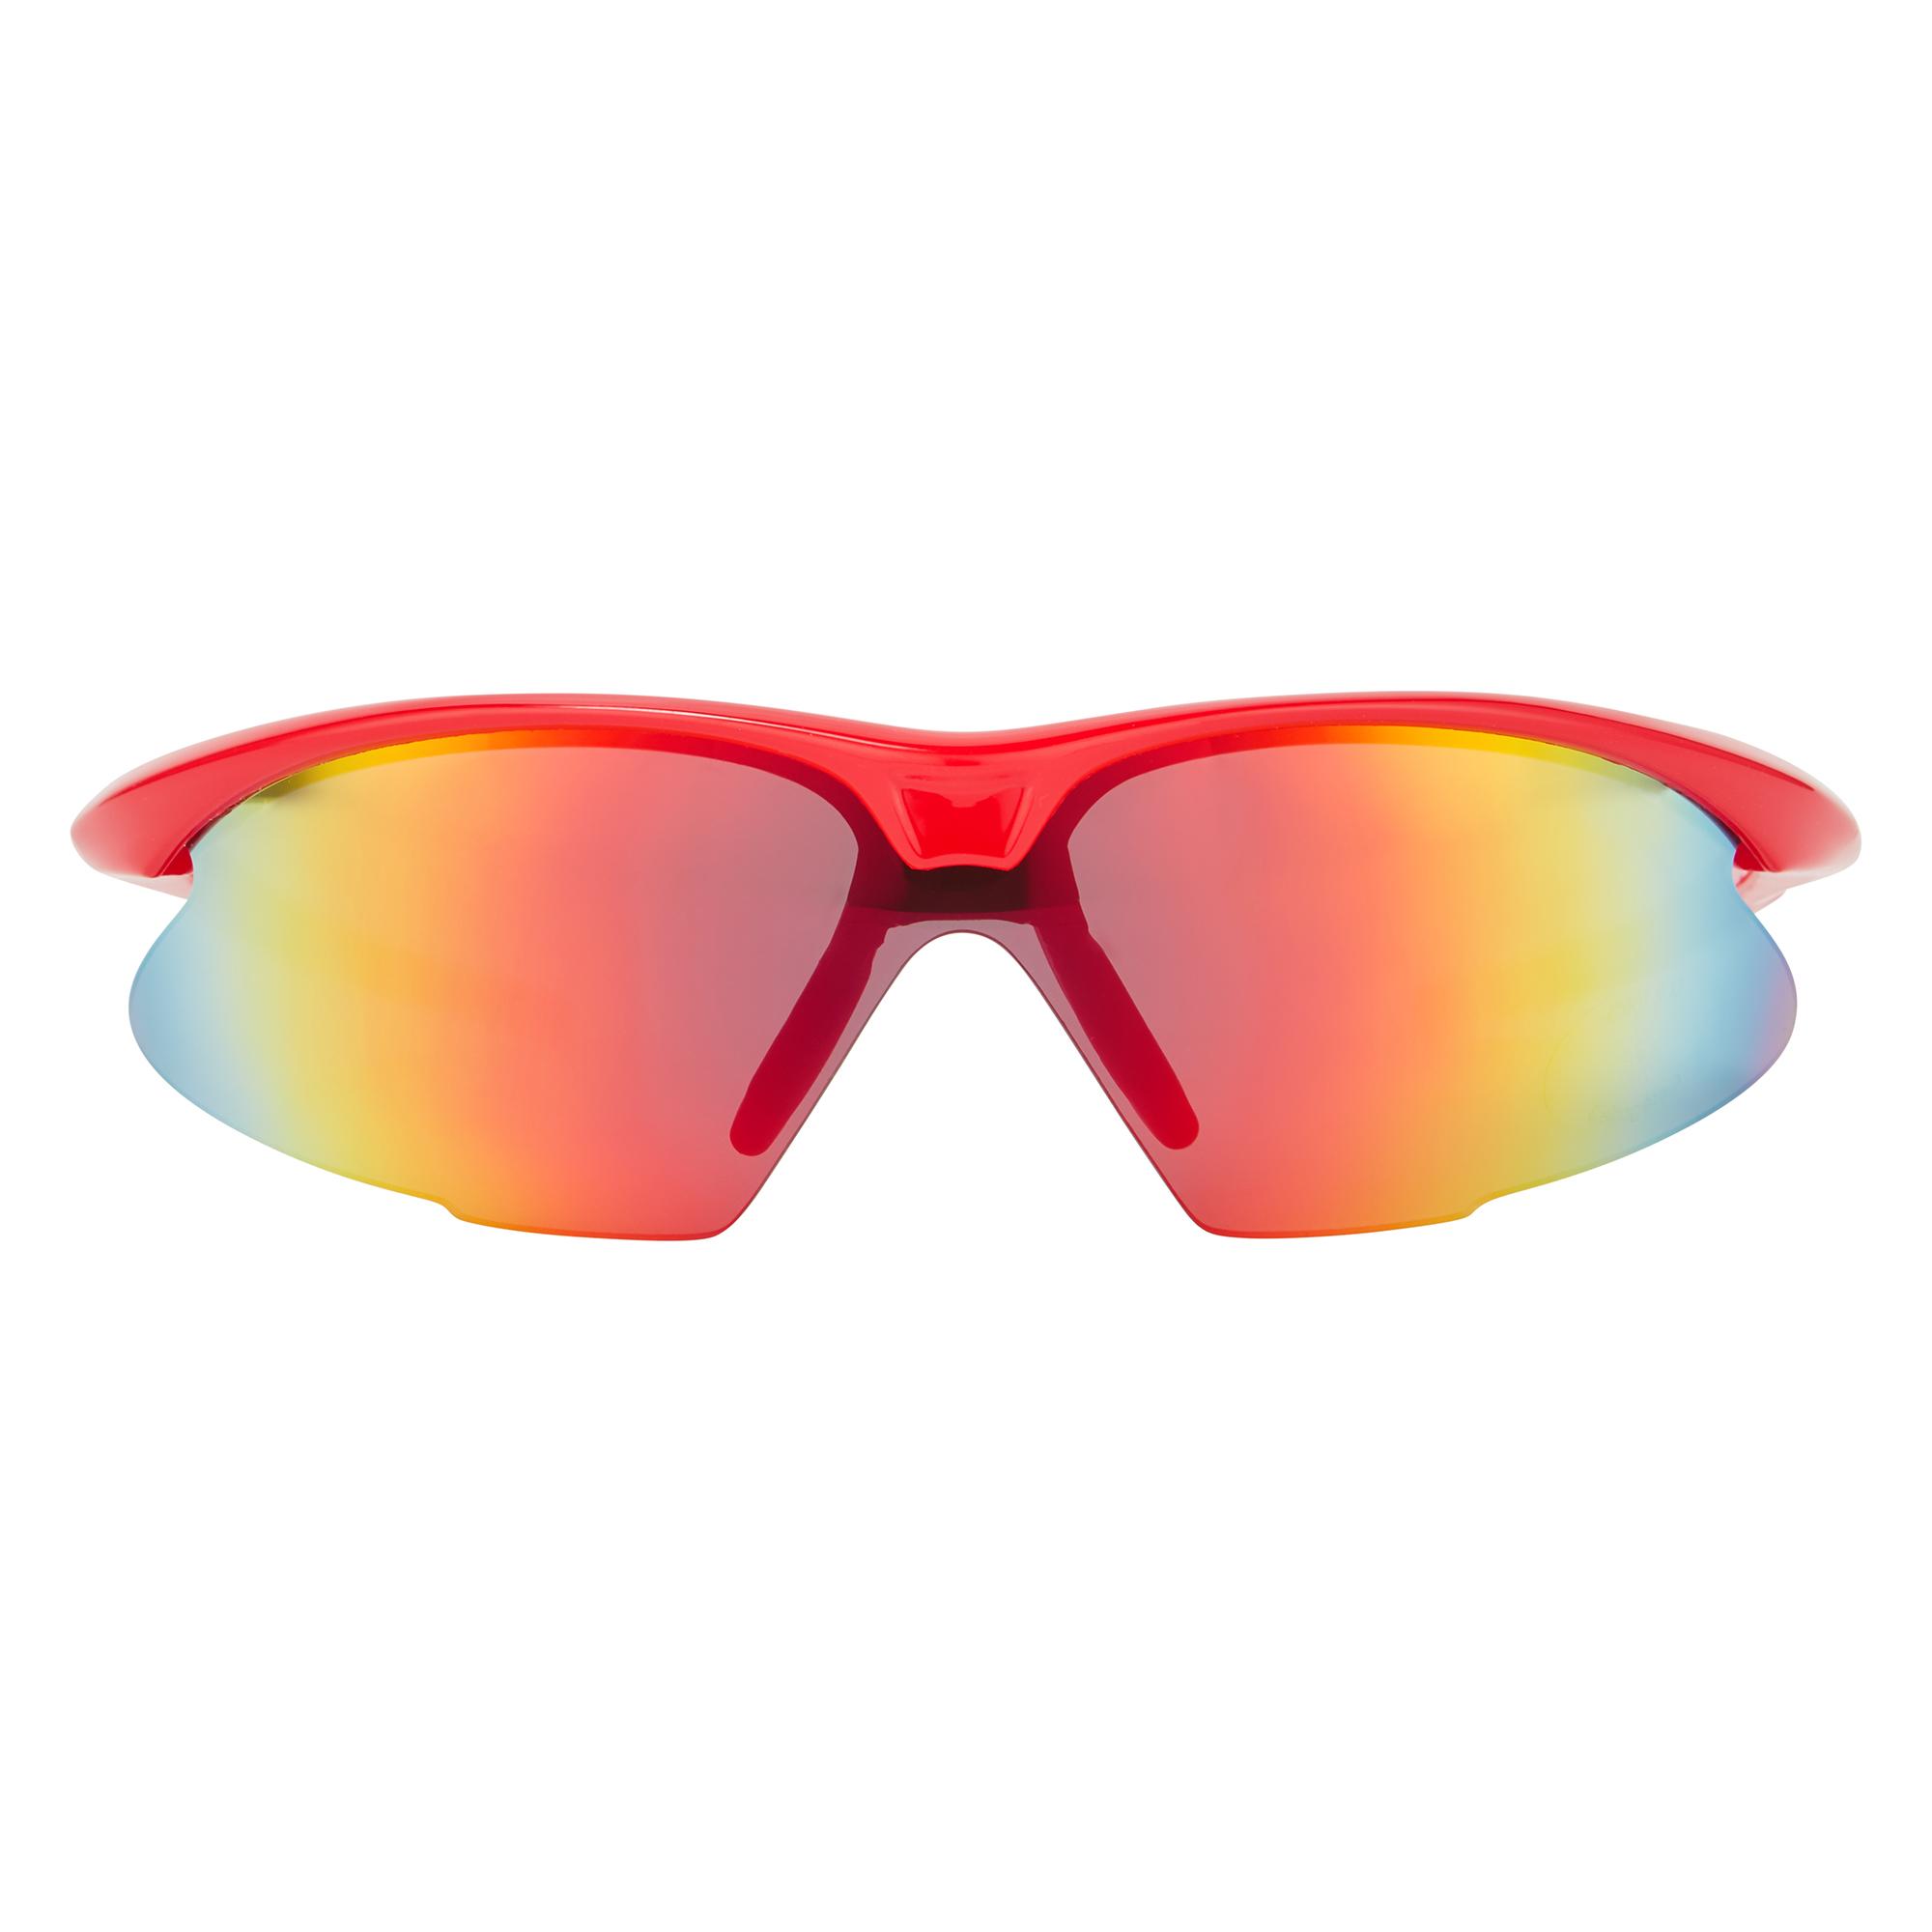 Dhb Pro Triple Lens Sunglasses - All Red